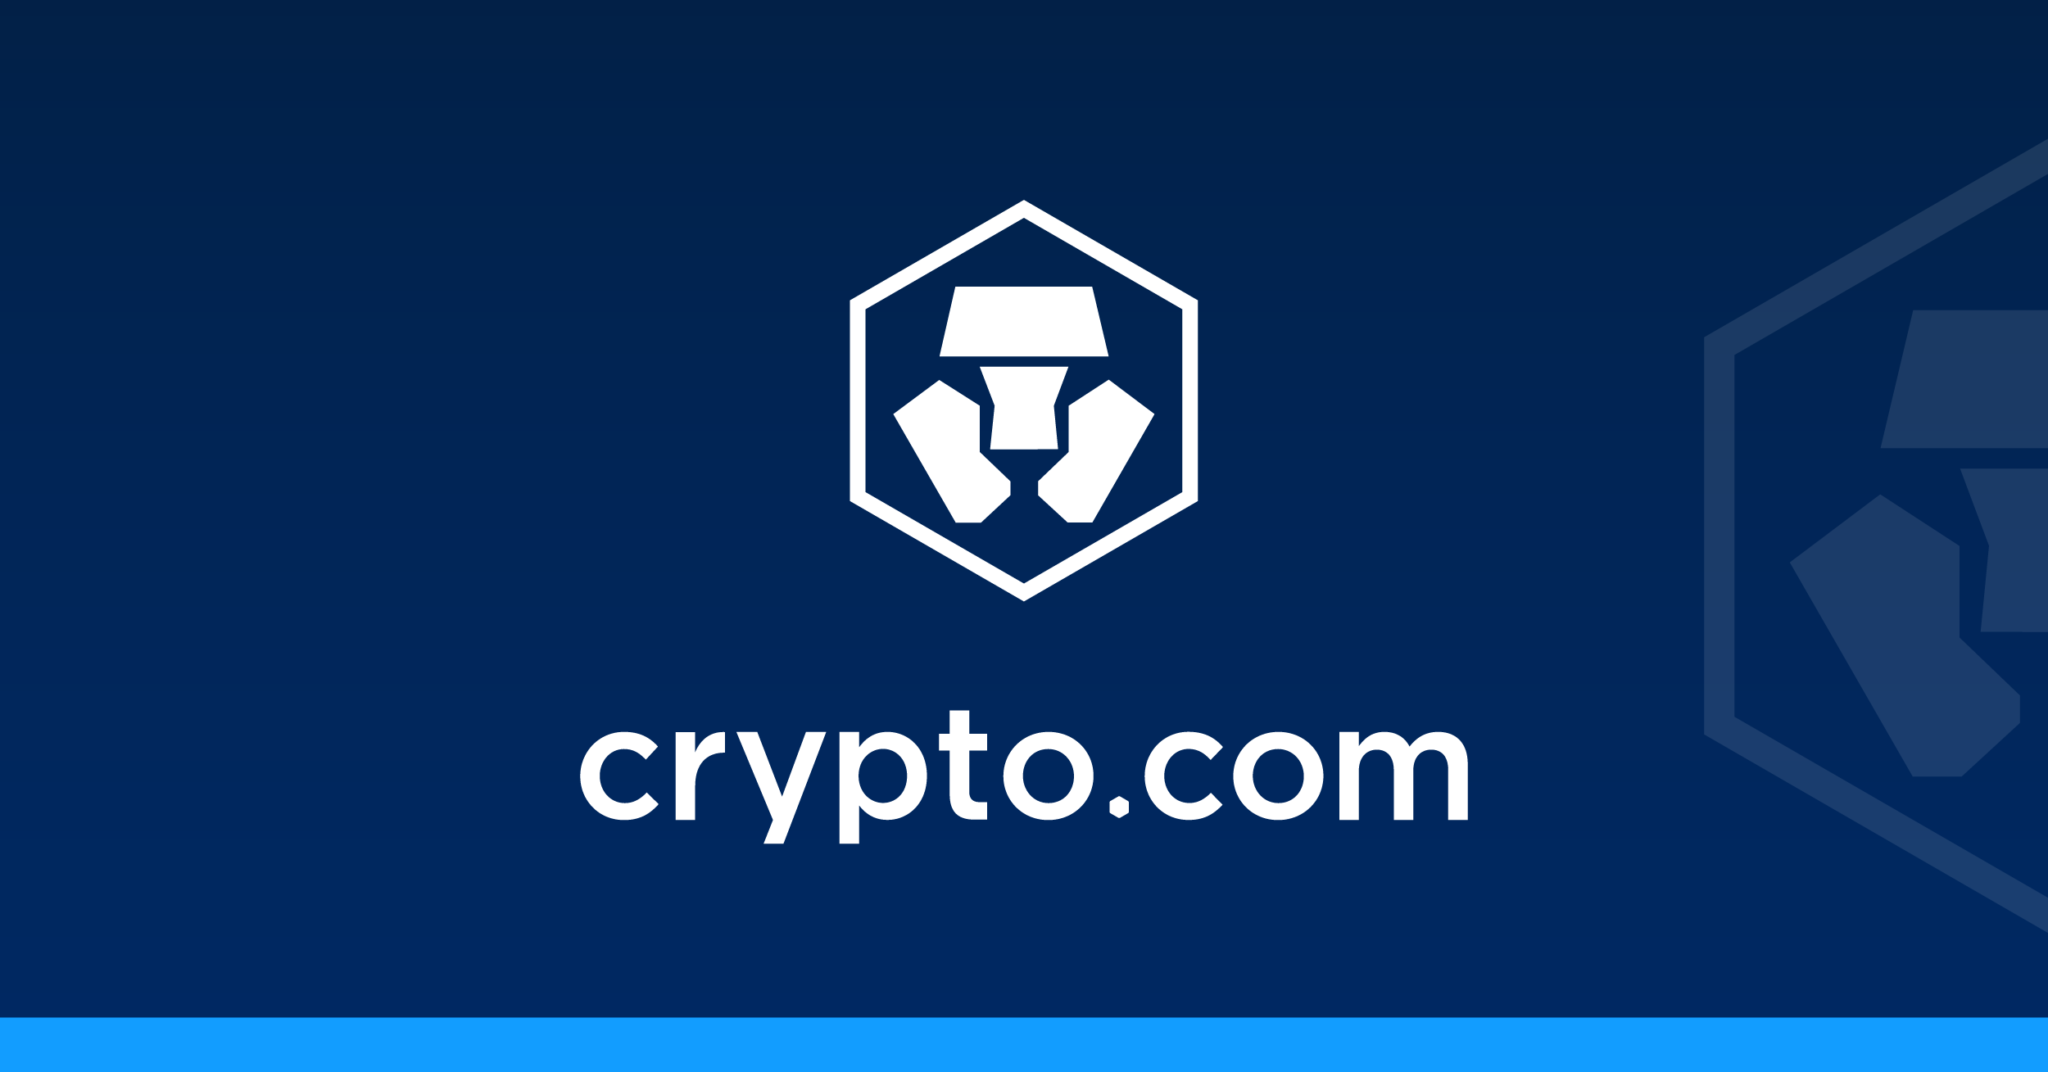 Share your 2021's crypto highlights with Crypto.com #YearinCrypto